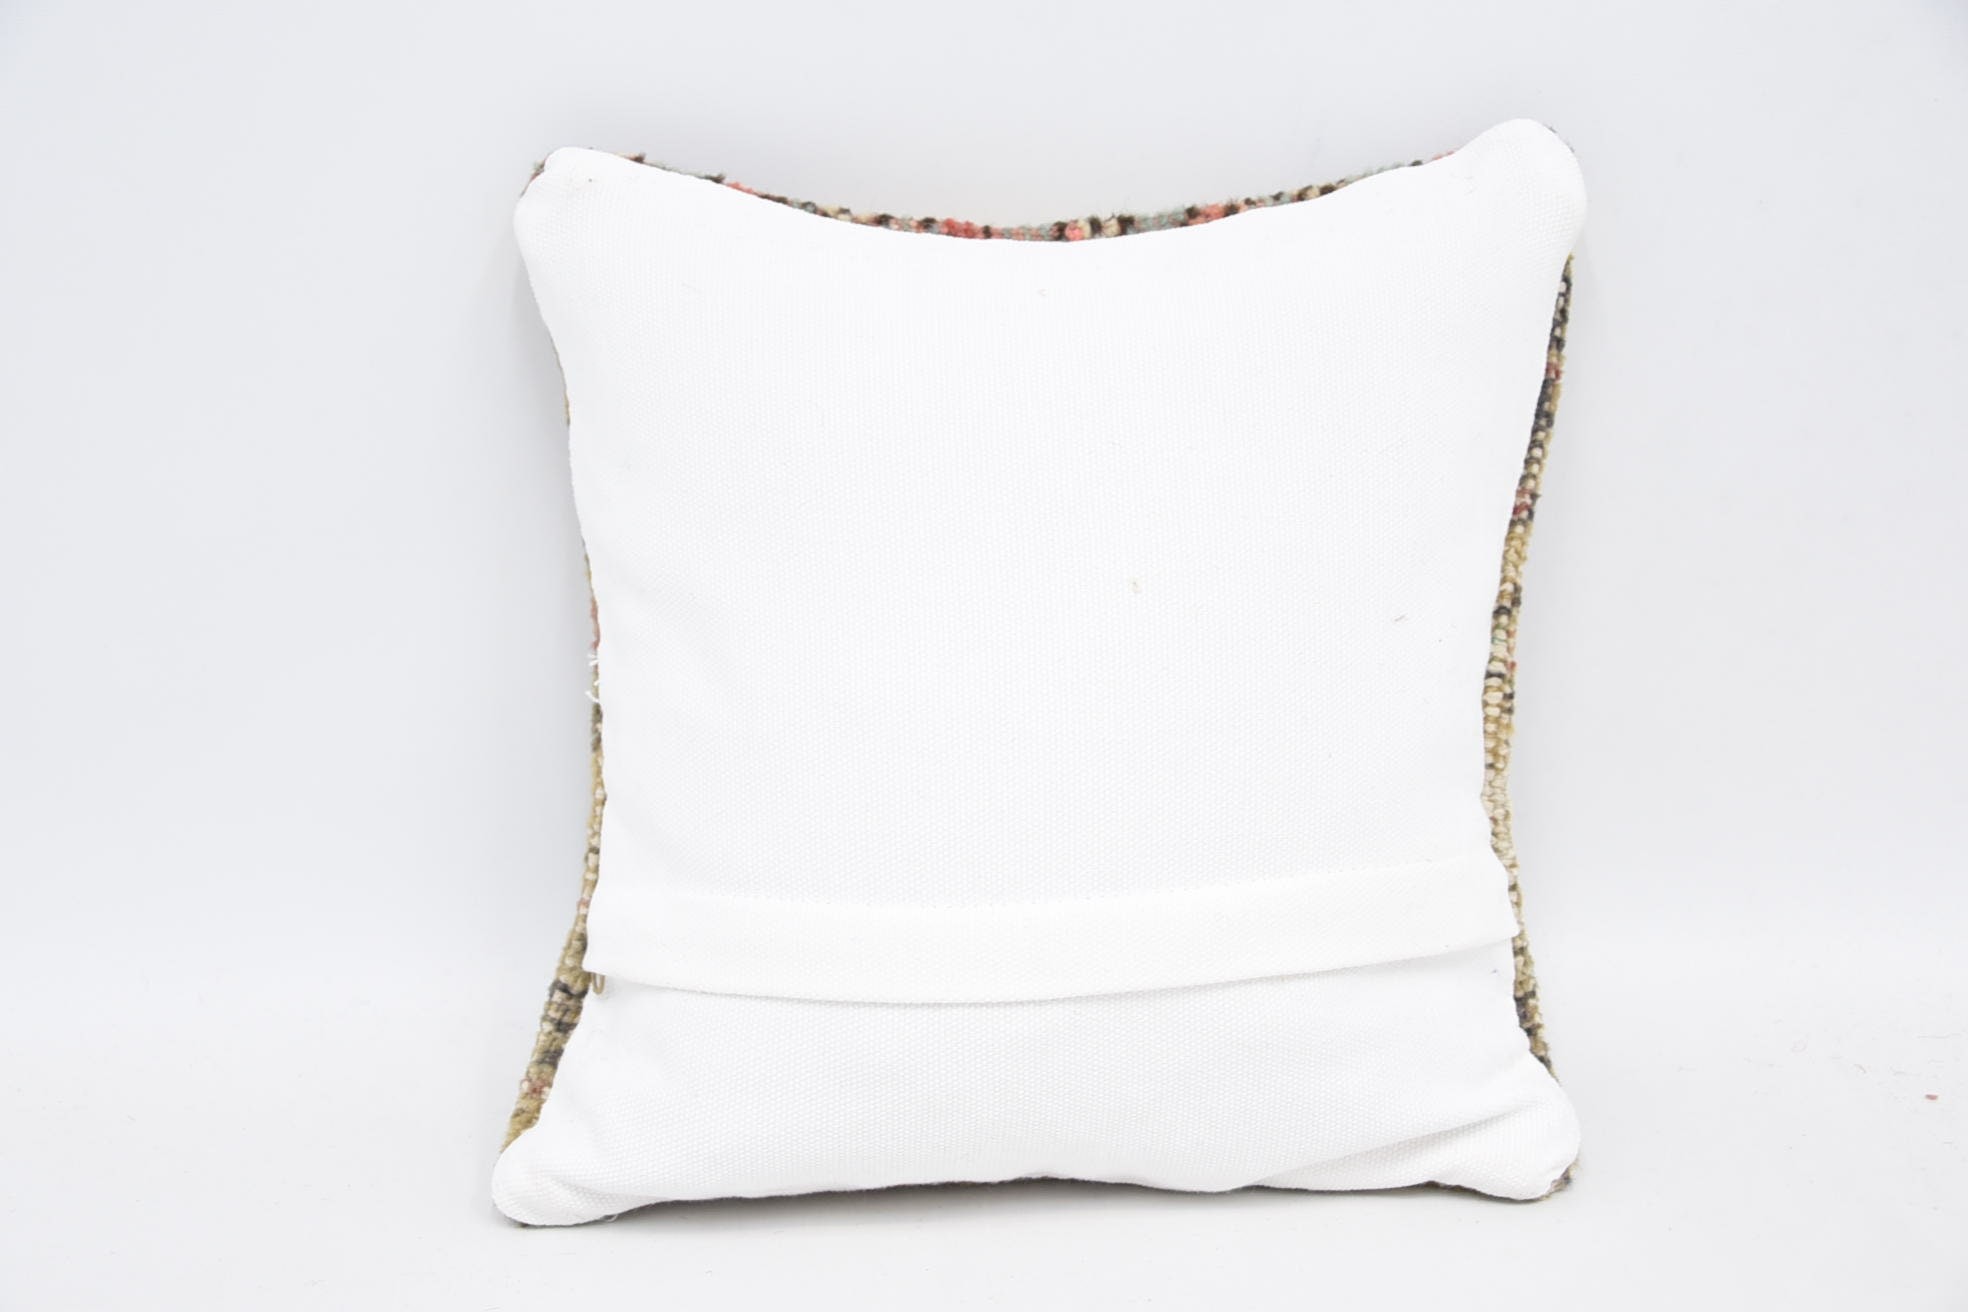 Gift Pillow, Boho Pillow, Ethnic Pillow Cover Cushion, Ethnic Pillow Cover Pillow Sham, 12"x12" Beige Pillow Case, Vintage Pillow